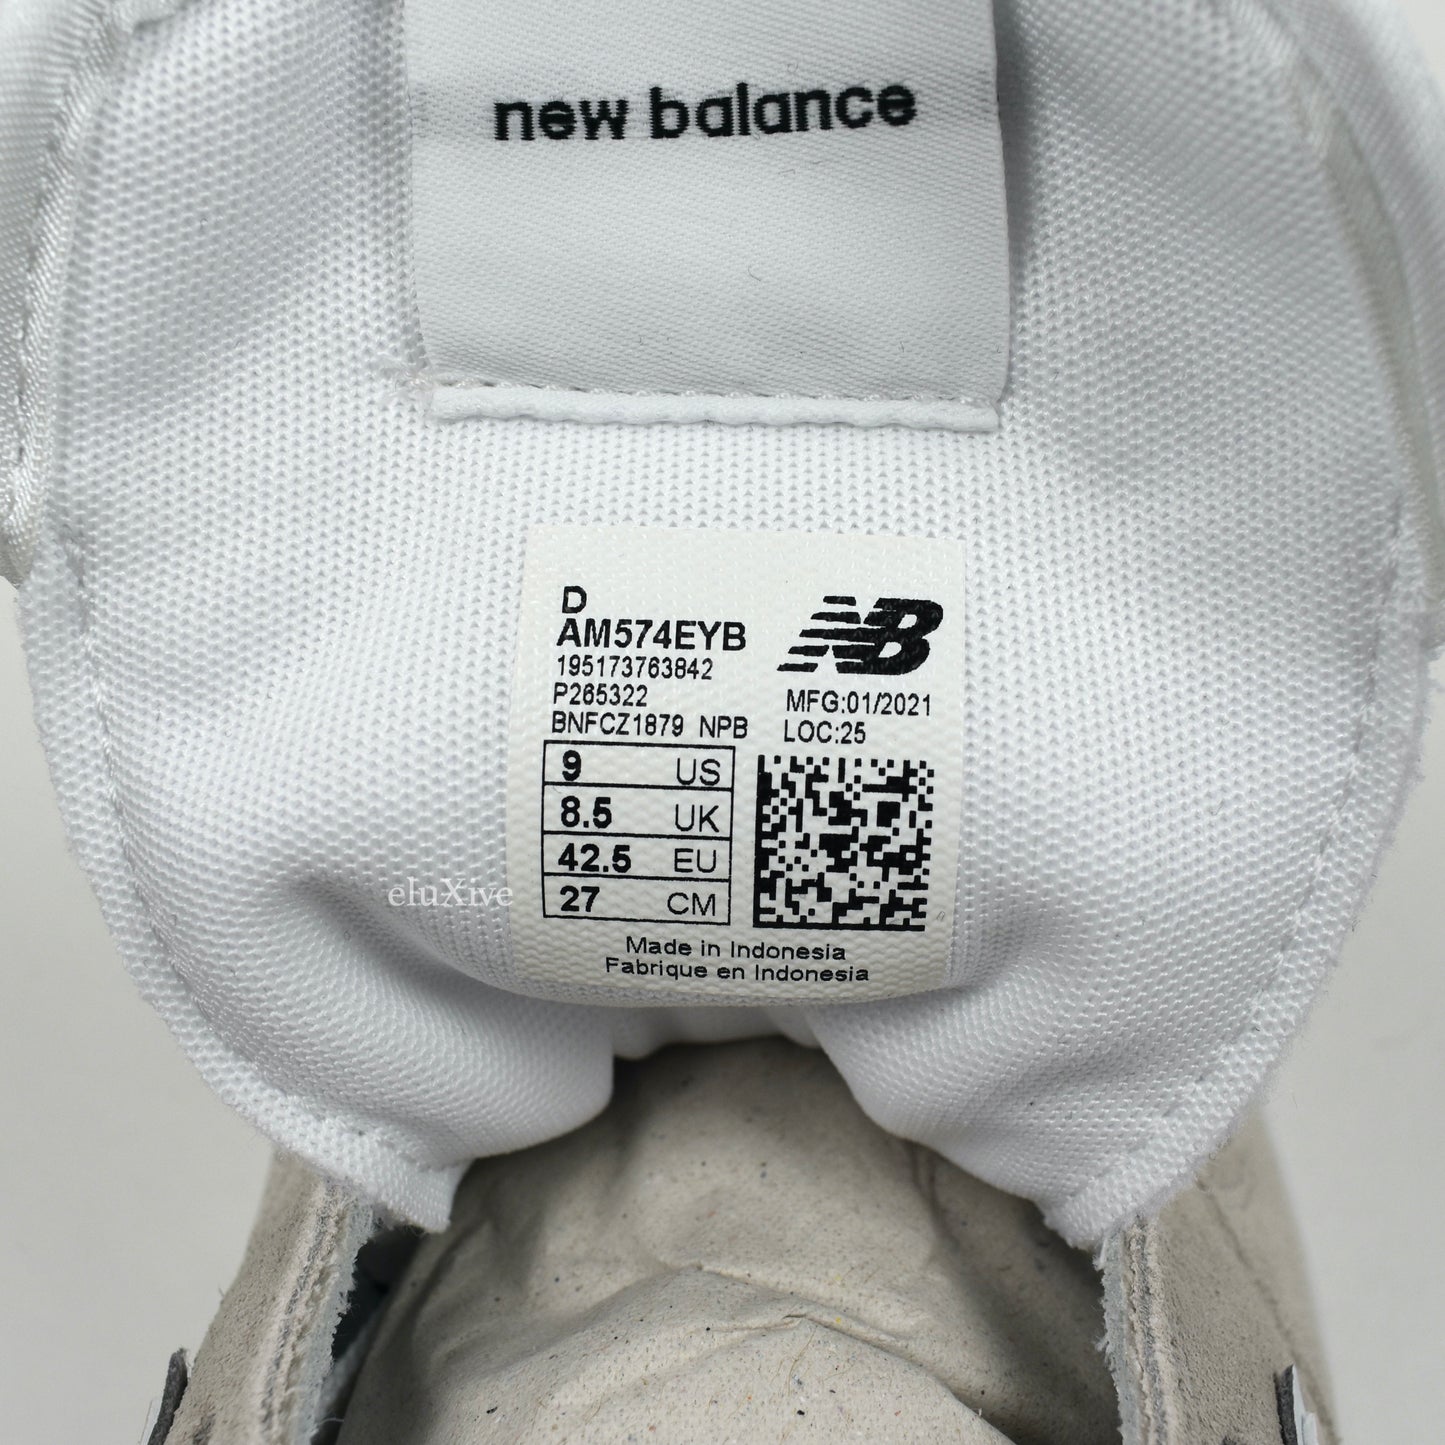 Junya Watanabe x New Balance  - AM574 Suede Sneakers (Beige)